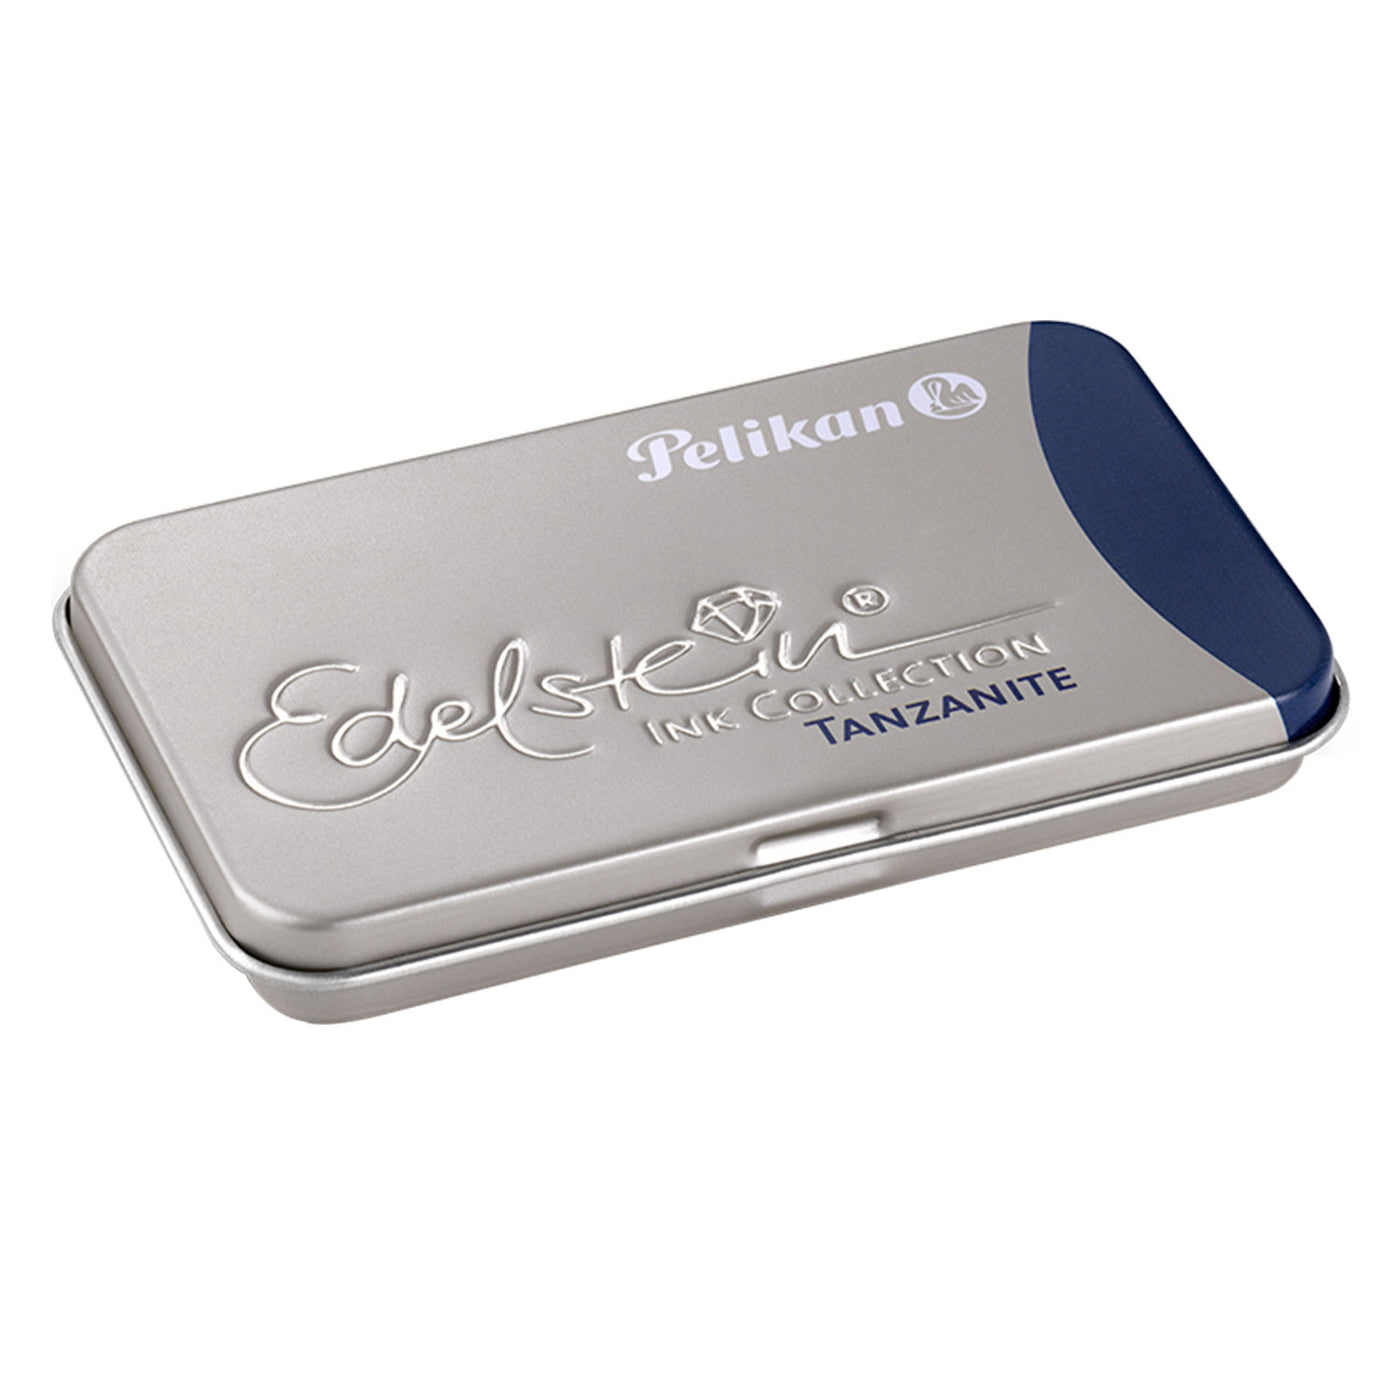 Pelikan Edelstein Ink Cartridge Pack of 6 Tanzanite